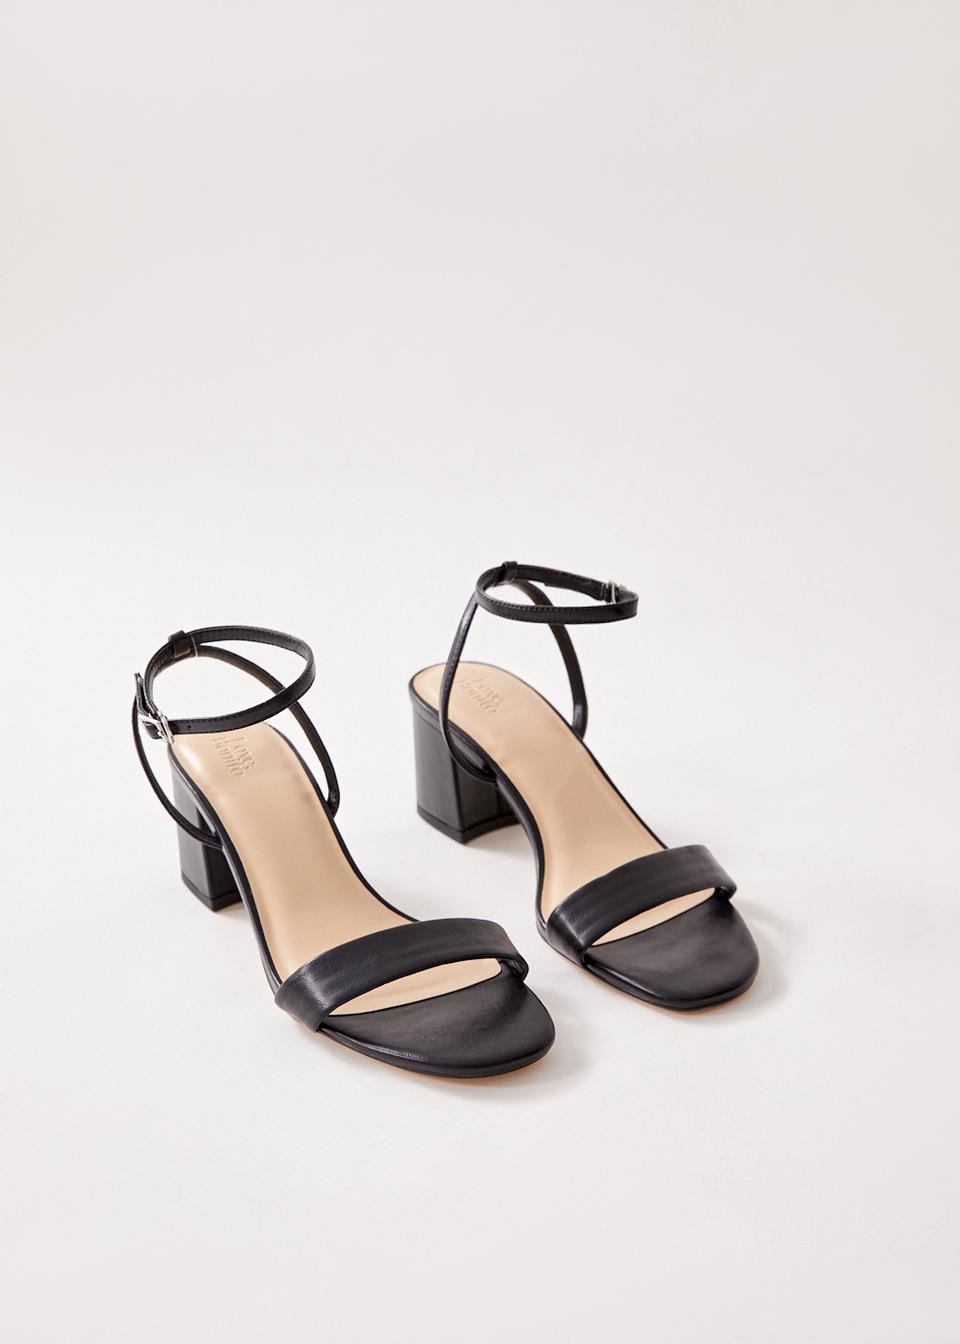 Buy Amelia Block Heel Sandals @ Love, Bonito Singapore | Shop Women's ...